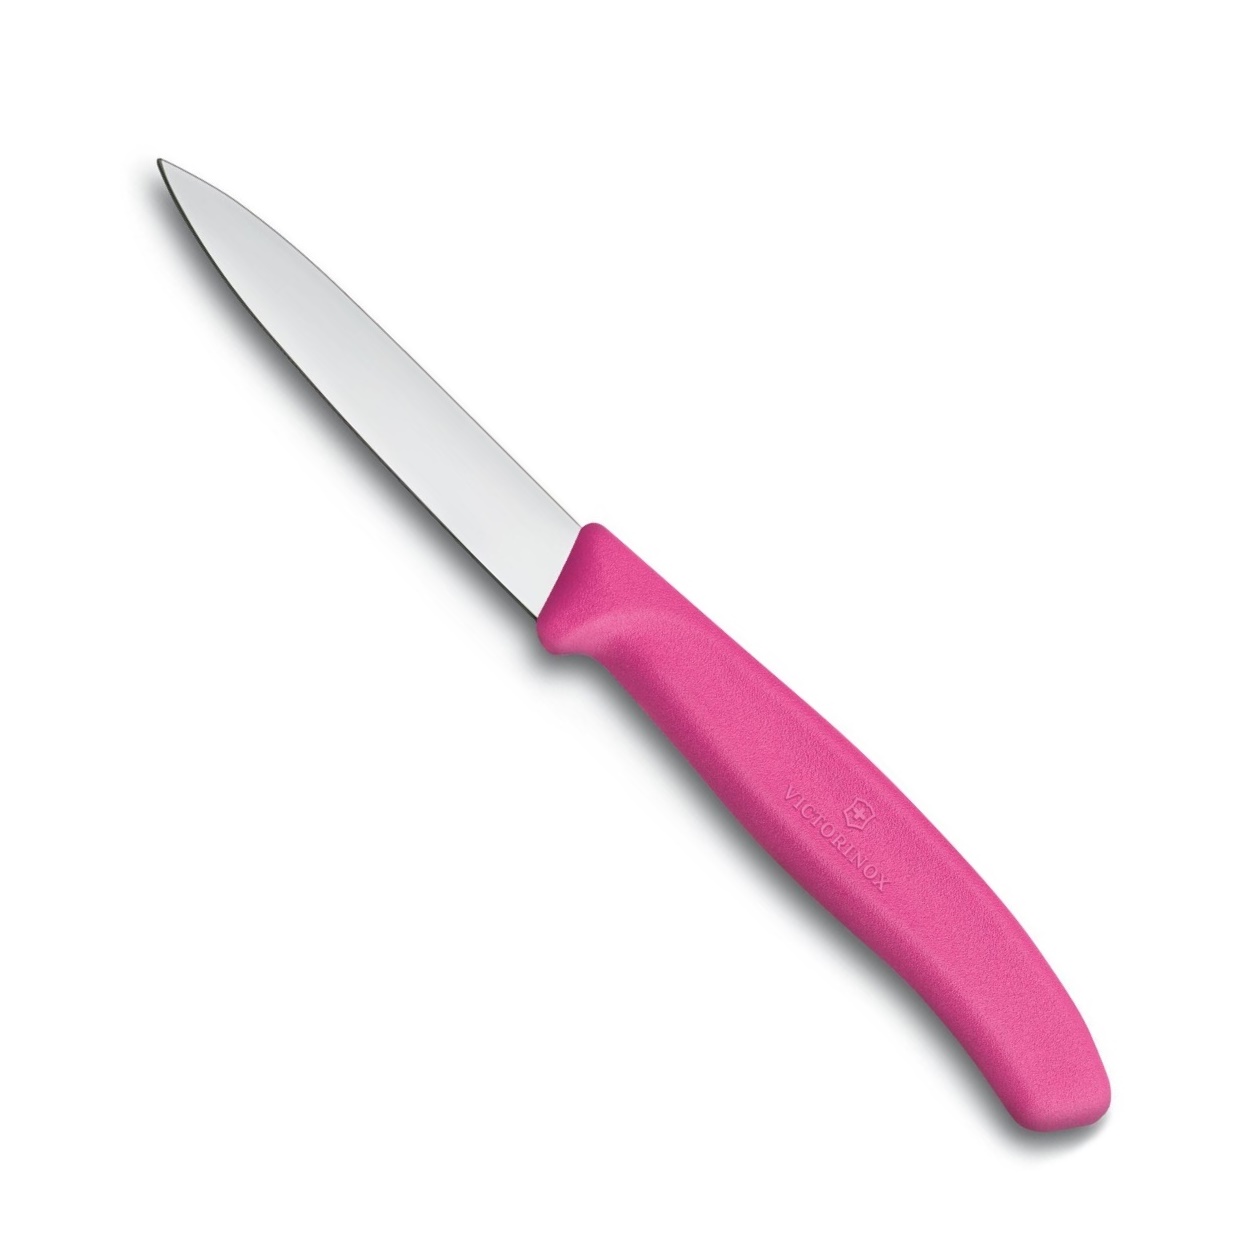 Nůž na zeleninu SWISS CLASSIC, růžový 8 cm - Victorinox